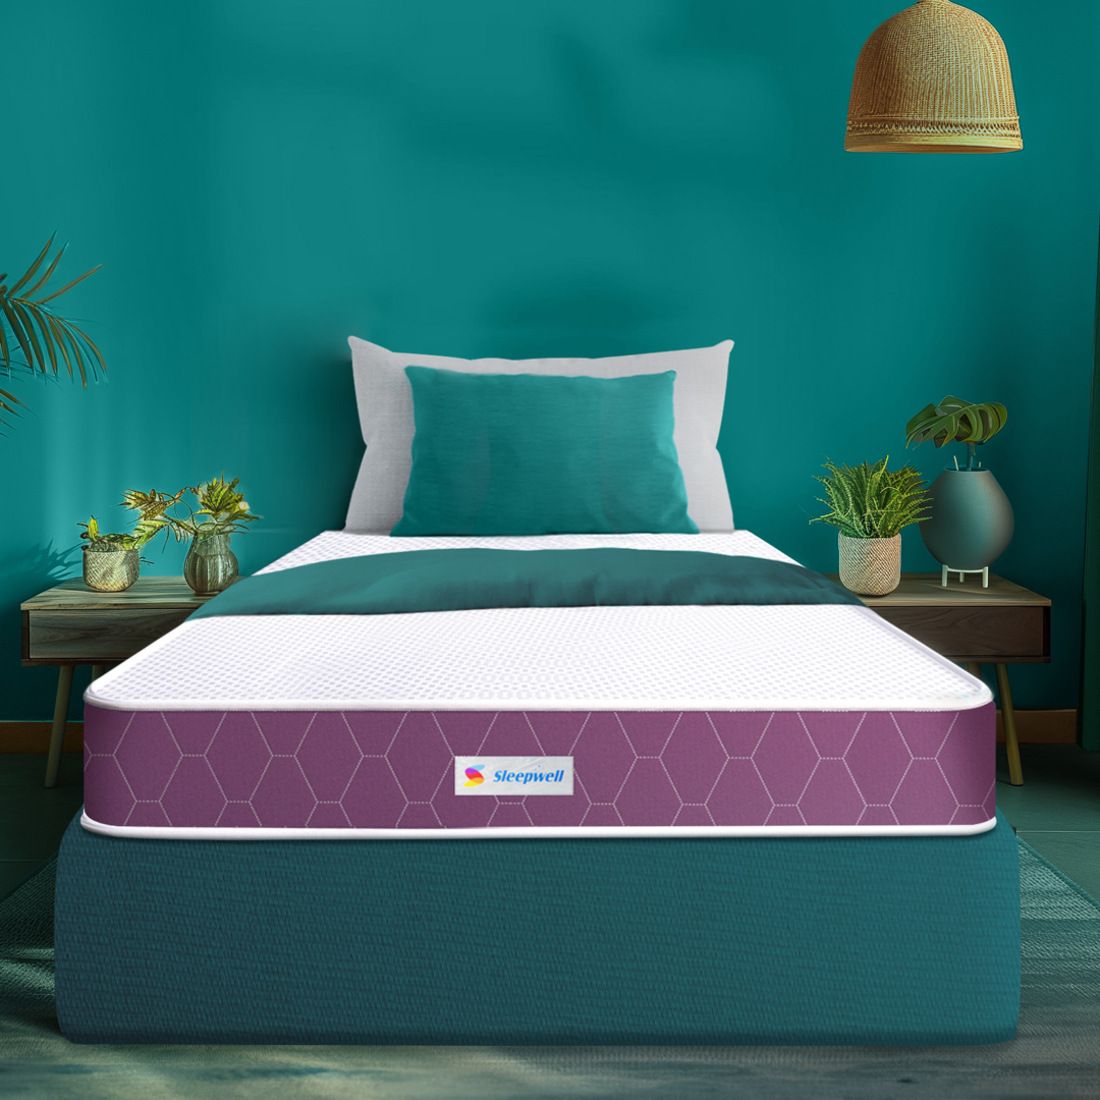 Sleepwell Ortho Mattress | Quilted | 8-inch Single Bed Size, Impressions Memory Foam, Medium Firm Mattress(Purple, 84x35X8)